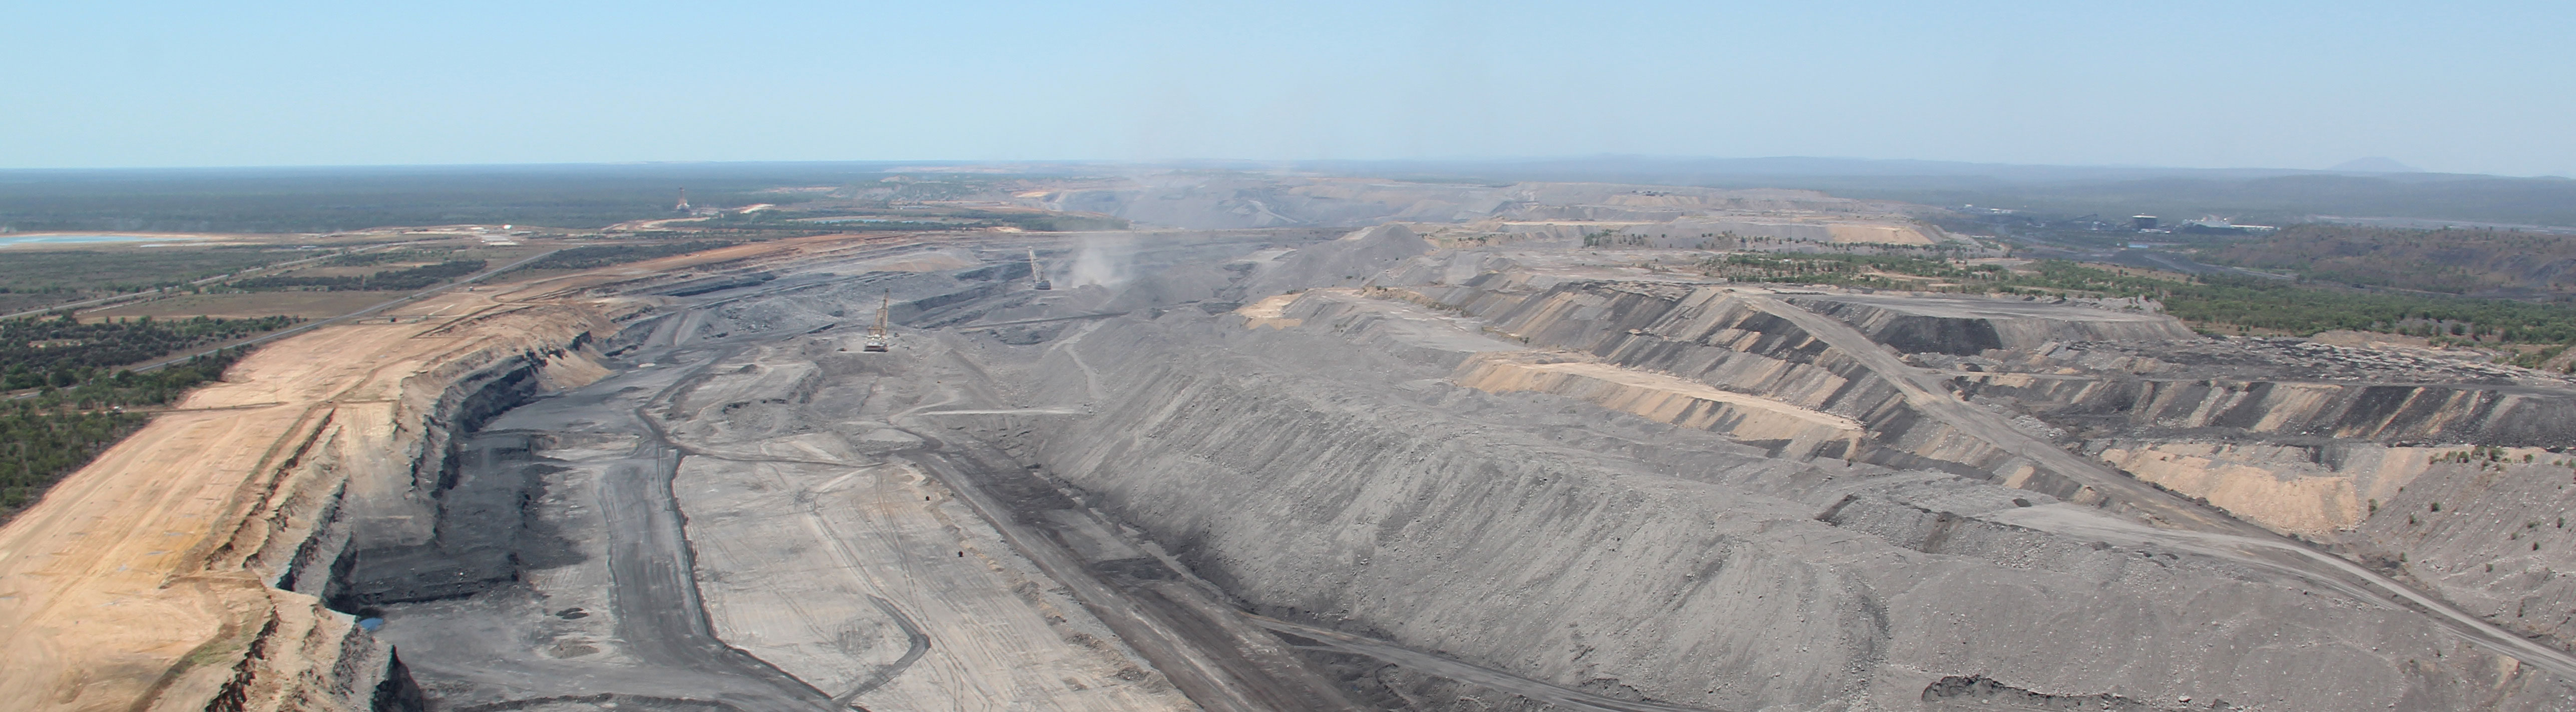 Saraji coal mine, Dysart, Queensland, 2012. (Wikimedia Commons)